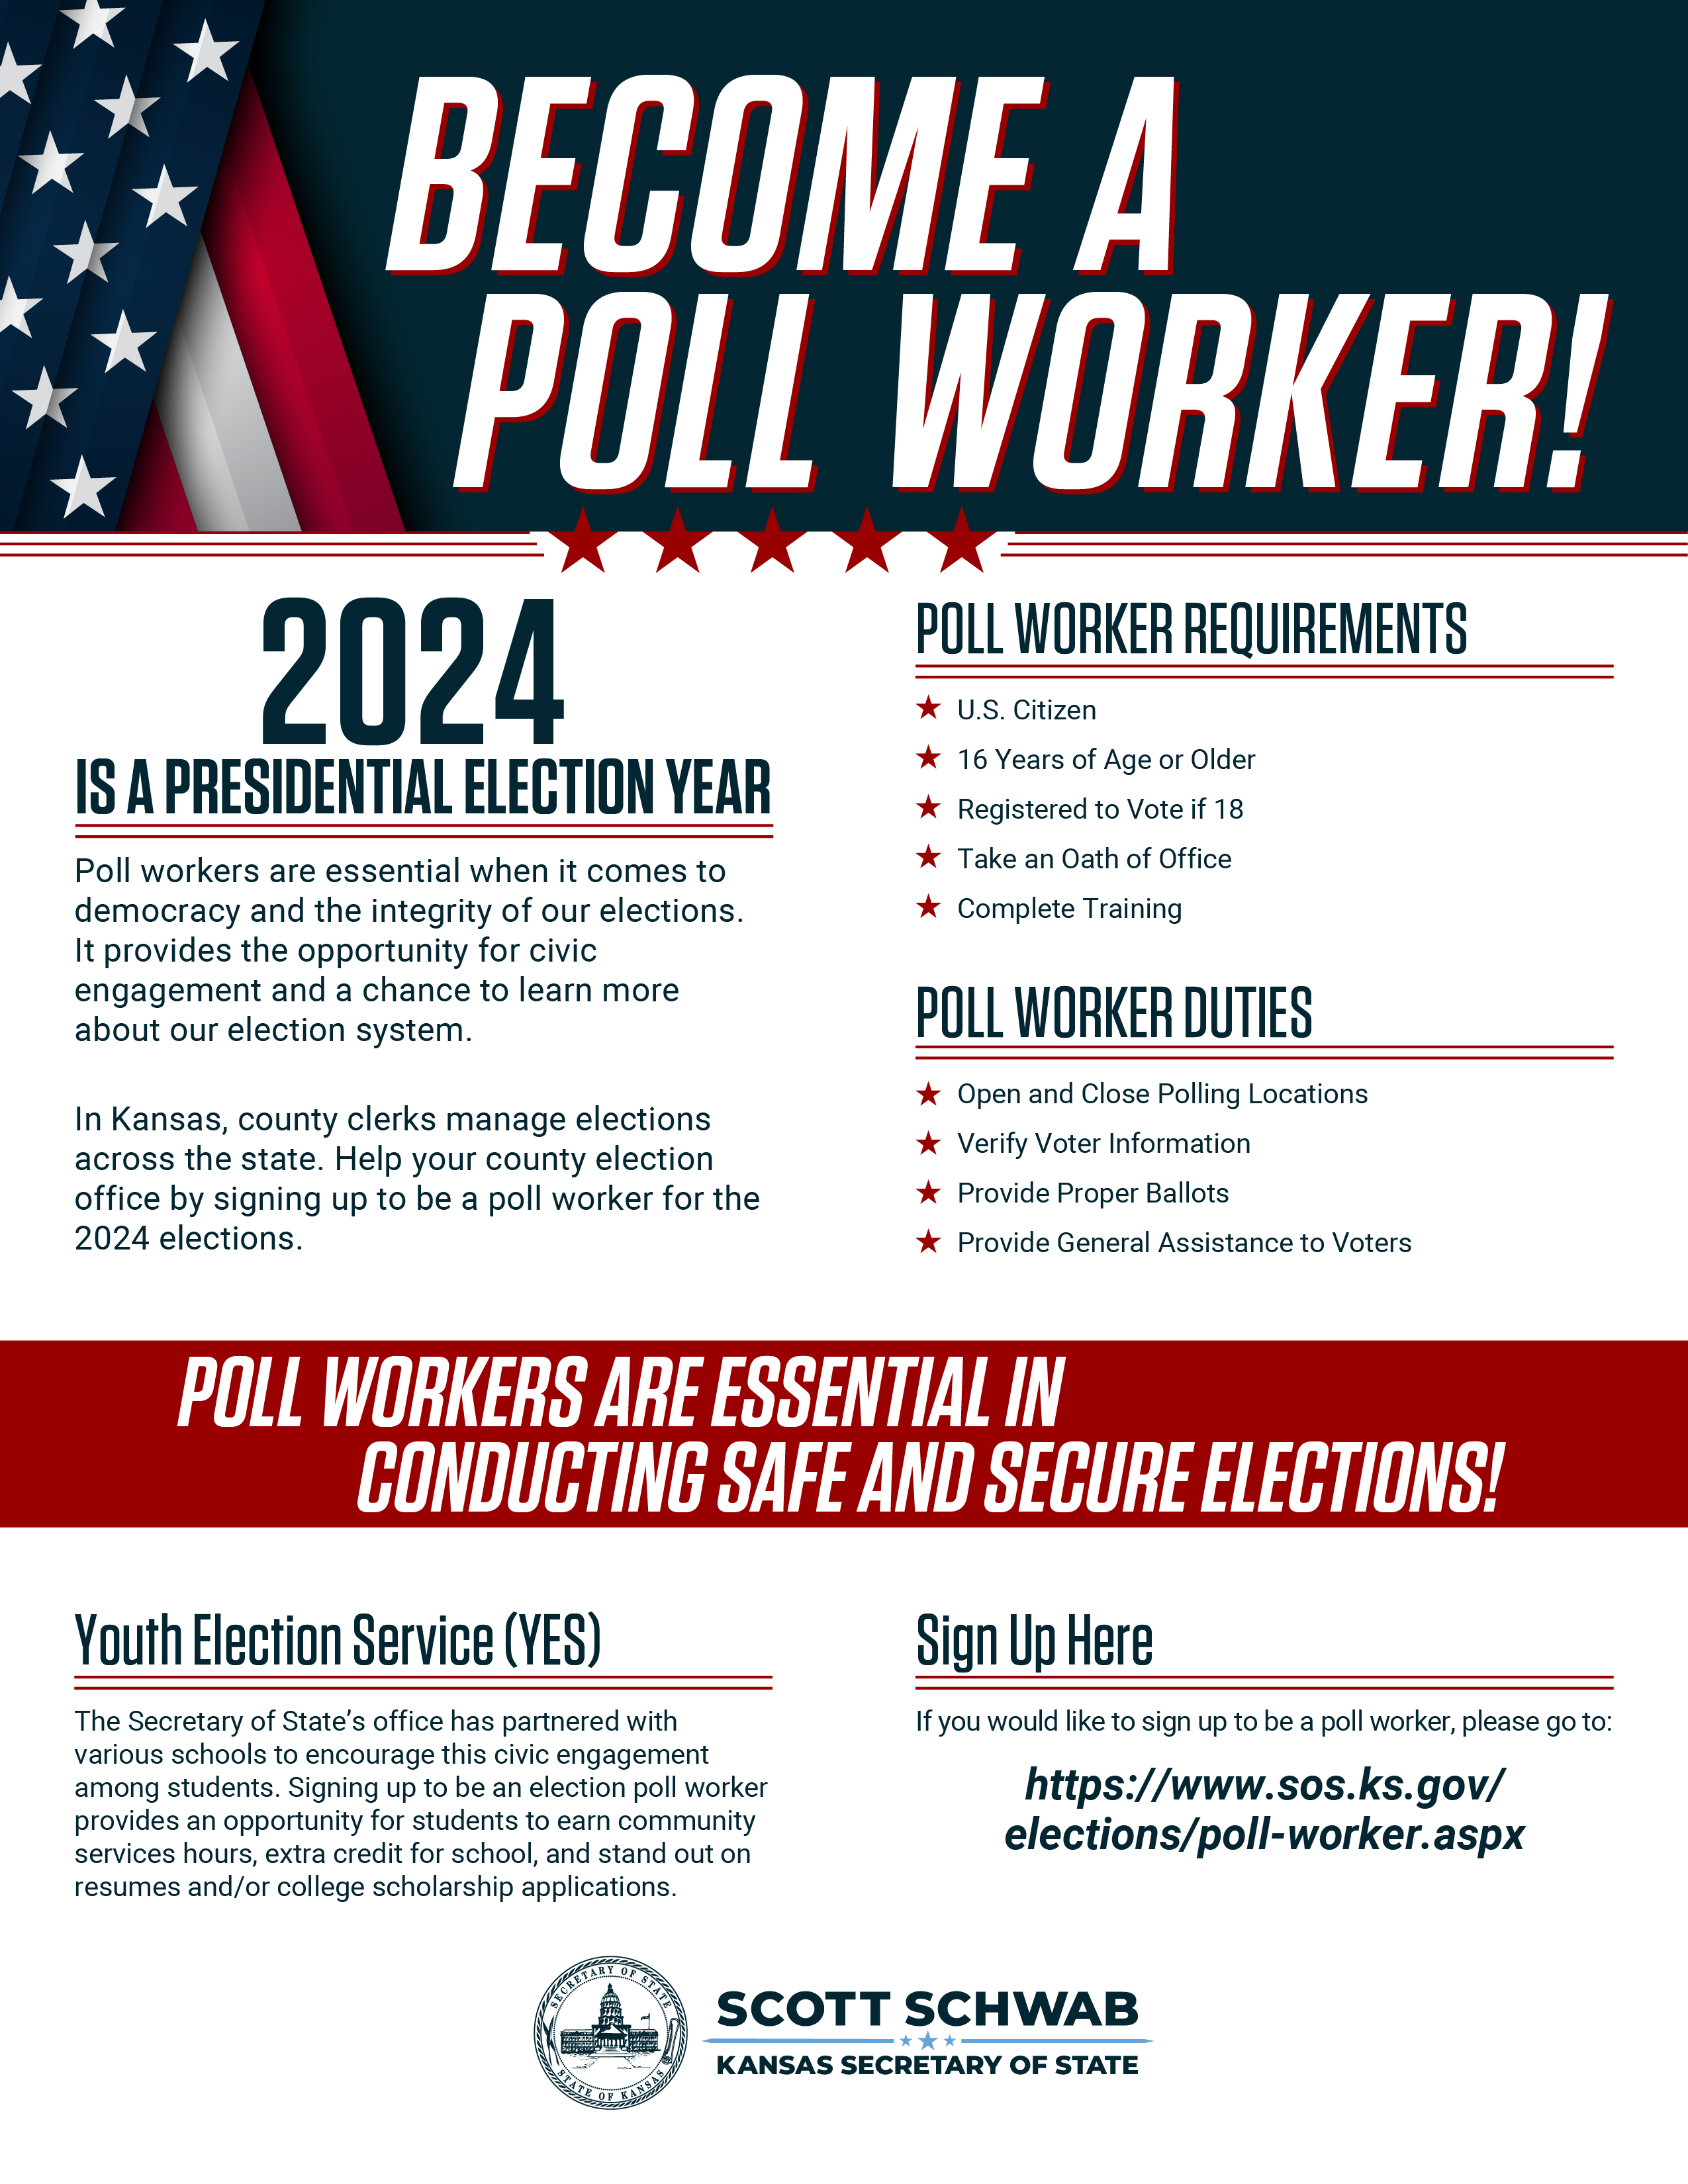 Poll Worker Sheet image